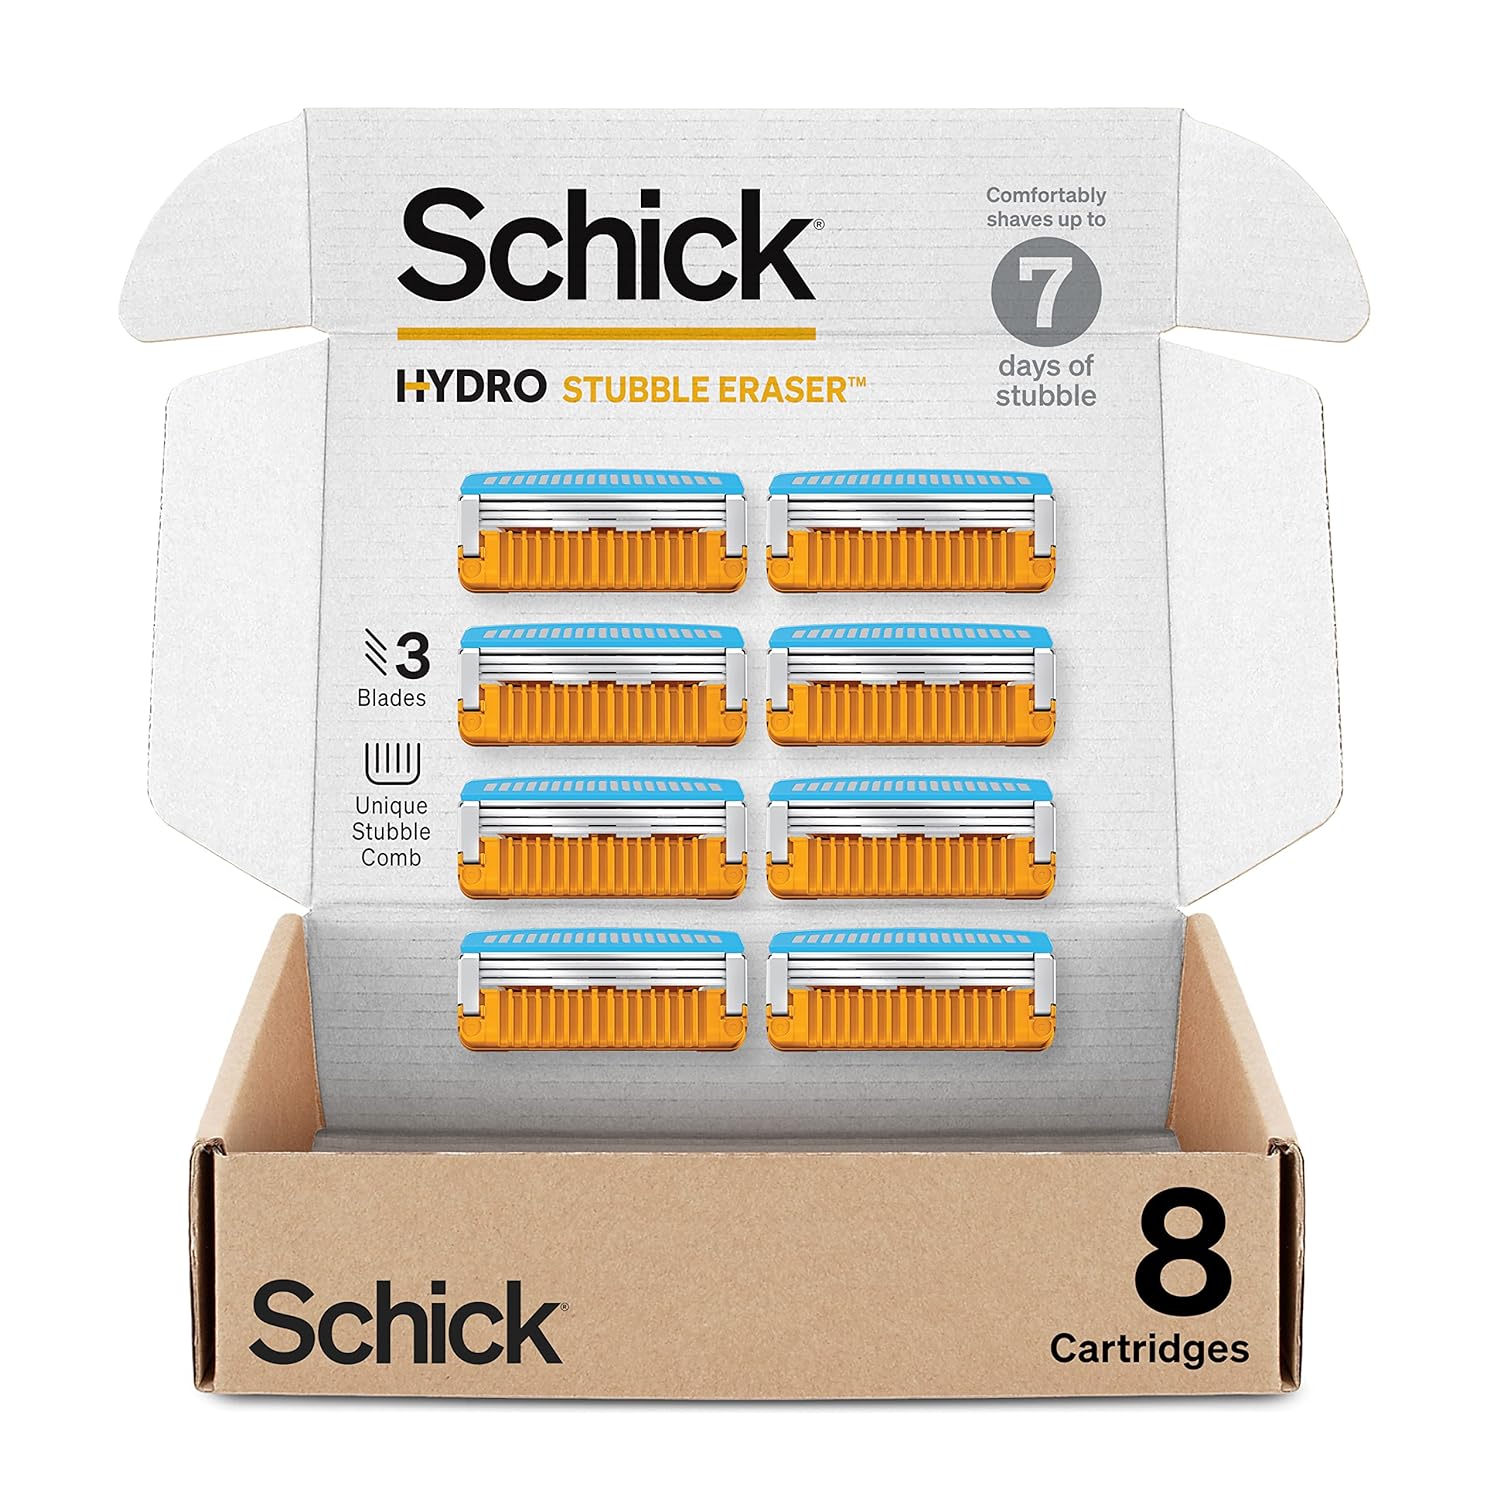 Schick Hydro Stubble Eraser Refills — Stubble Razor Refills, 8 Count